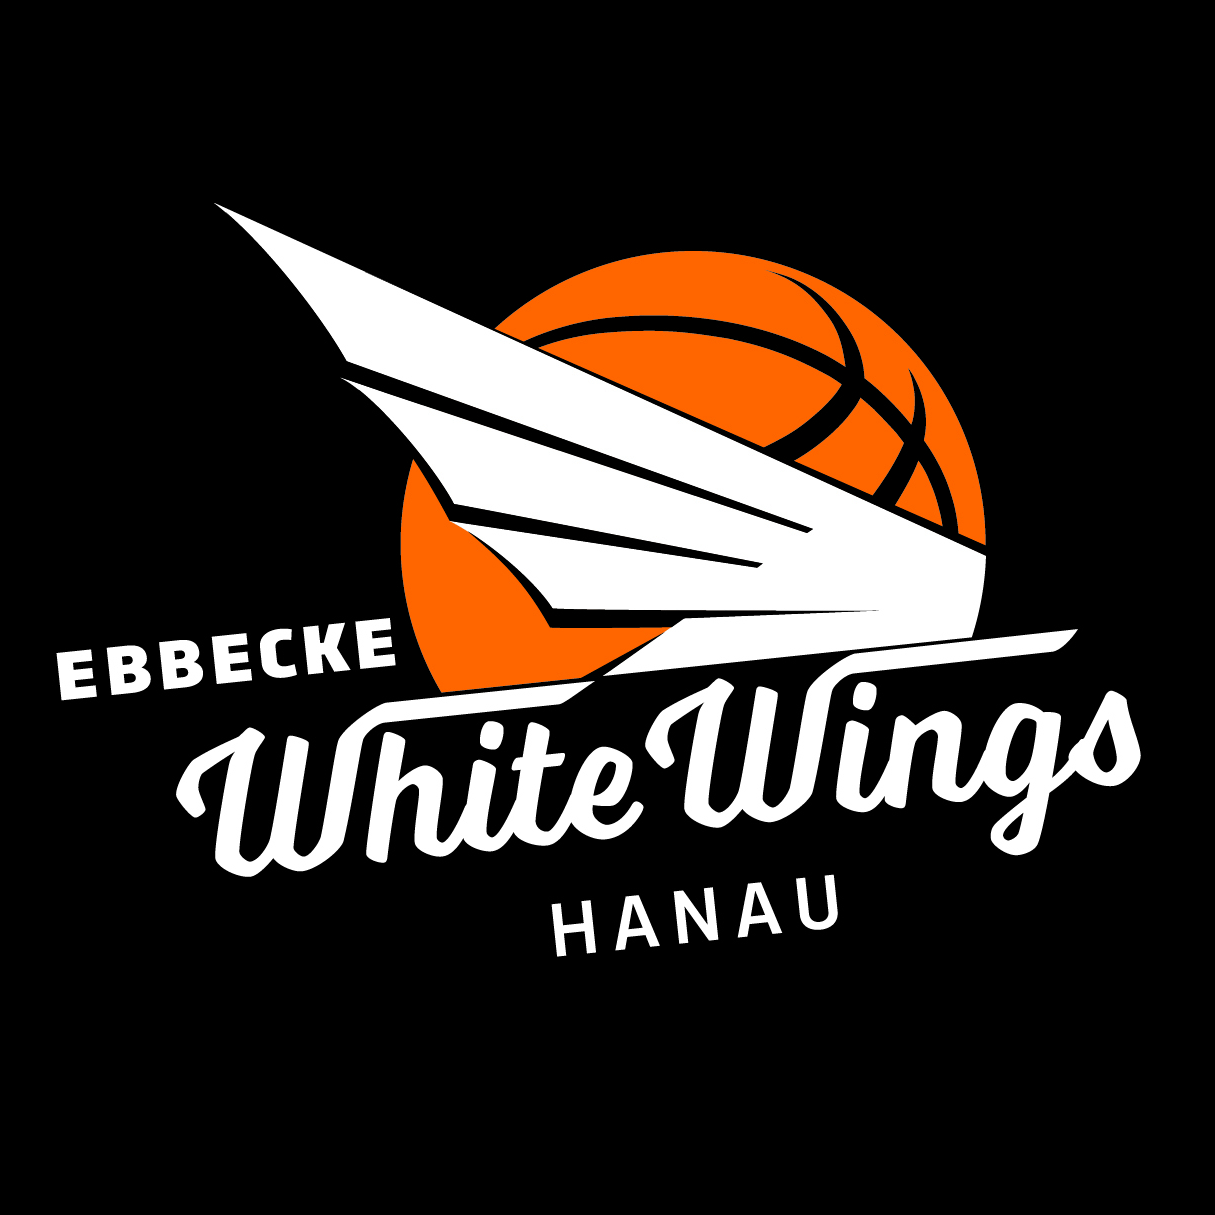 Ebbecke White Wings Hanau Sponsoringprofil Sponsoo